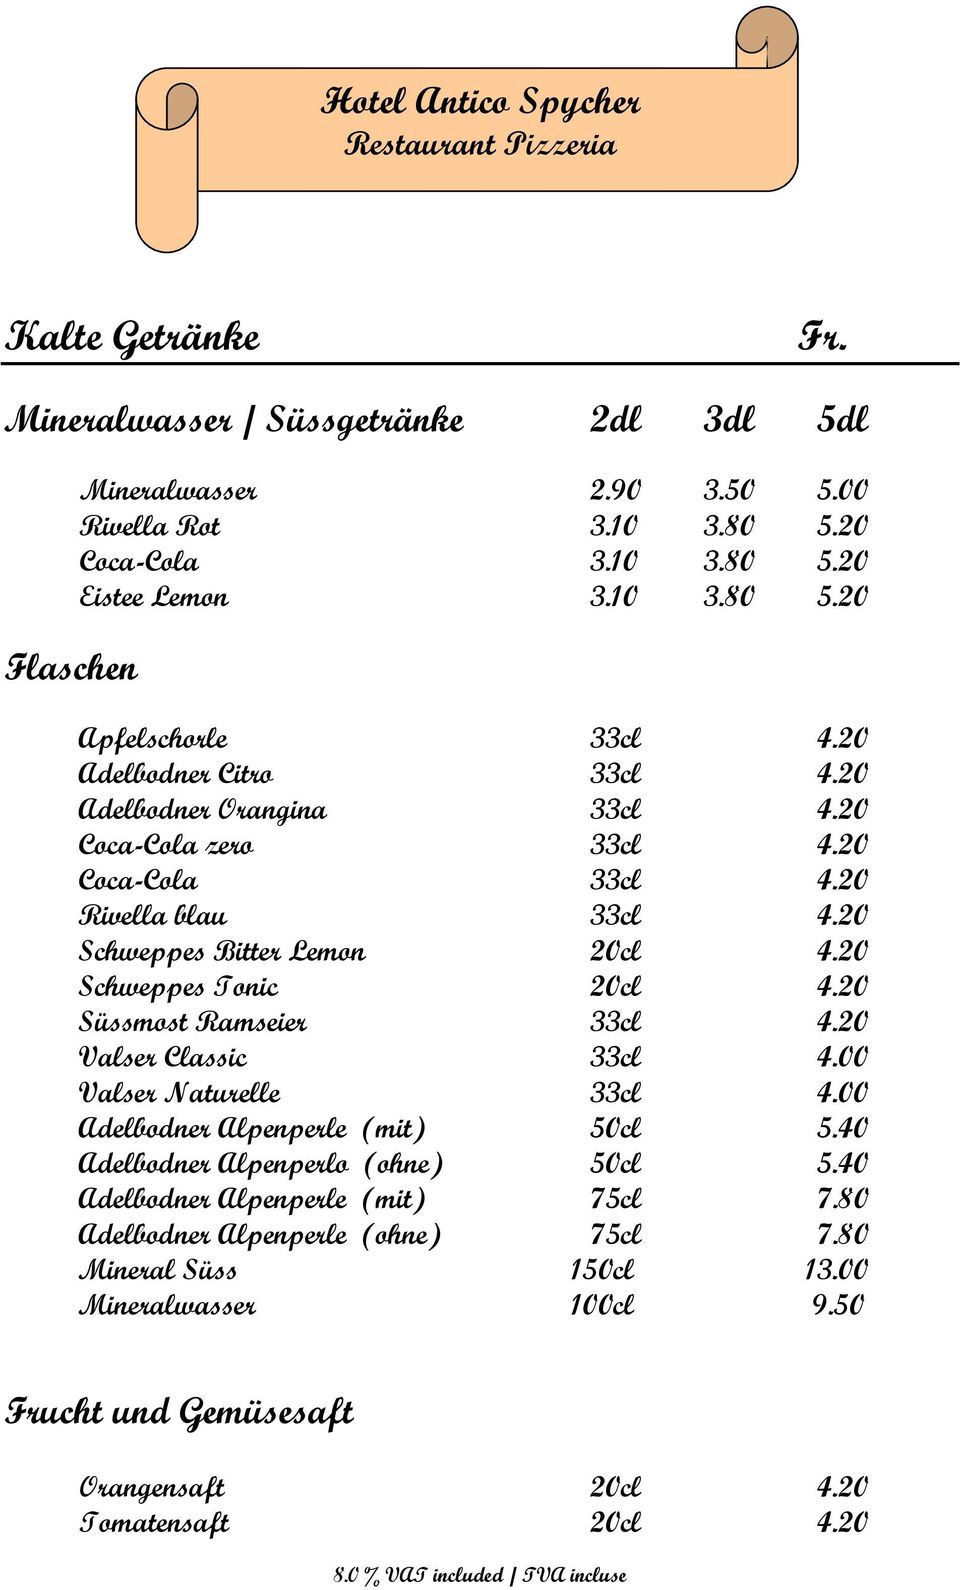 20 Schweppes Tonic 20cl 4.20 Süssmost Ramseier 33cl 4.20 Valser Classic 33cl 4.00 Valser Naturelle 33cl 4.00 Adelbodner Alpenperle (mit) 50cl 5.40 Adelbodner Alpenperlo (ohne) 50cl 5.